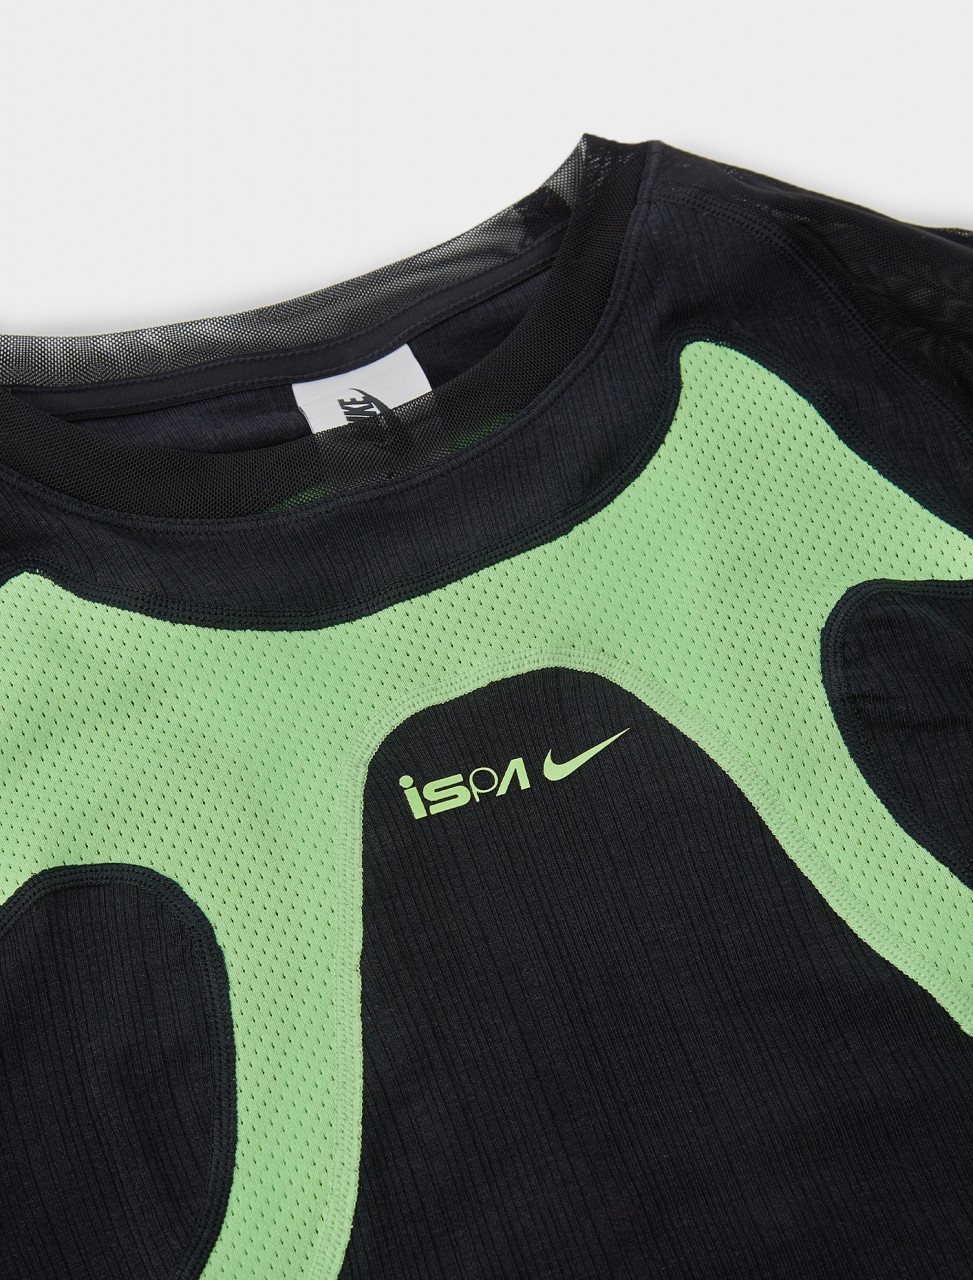 Nike ISPA Bodysuit with Panel Detail in Lime | Voo Store Berlin ...